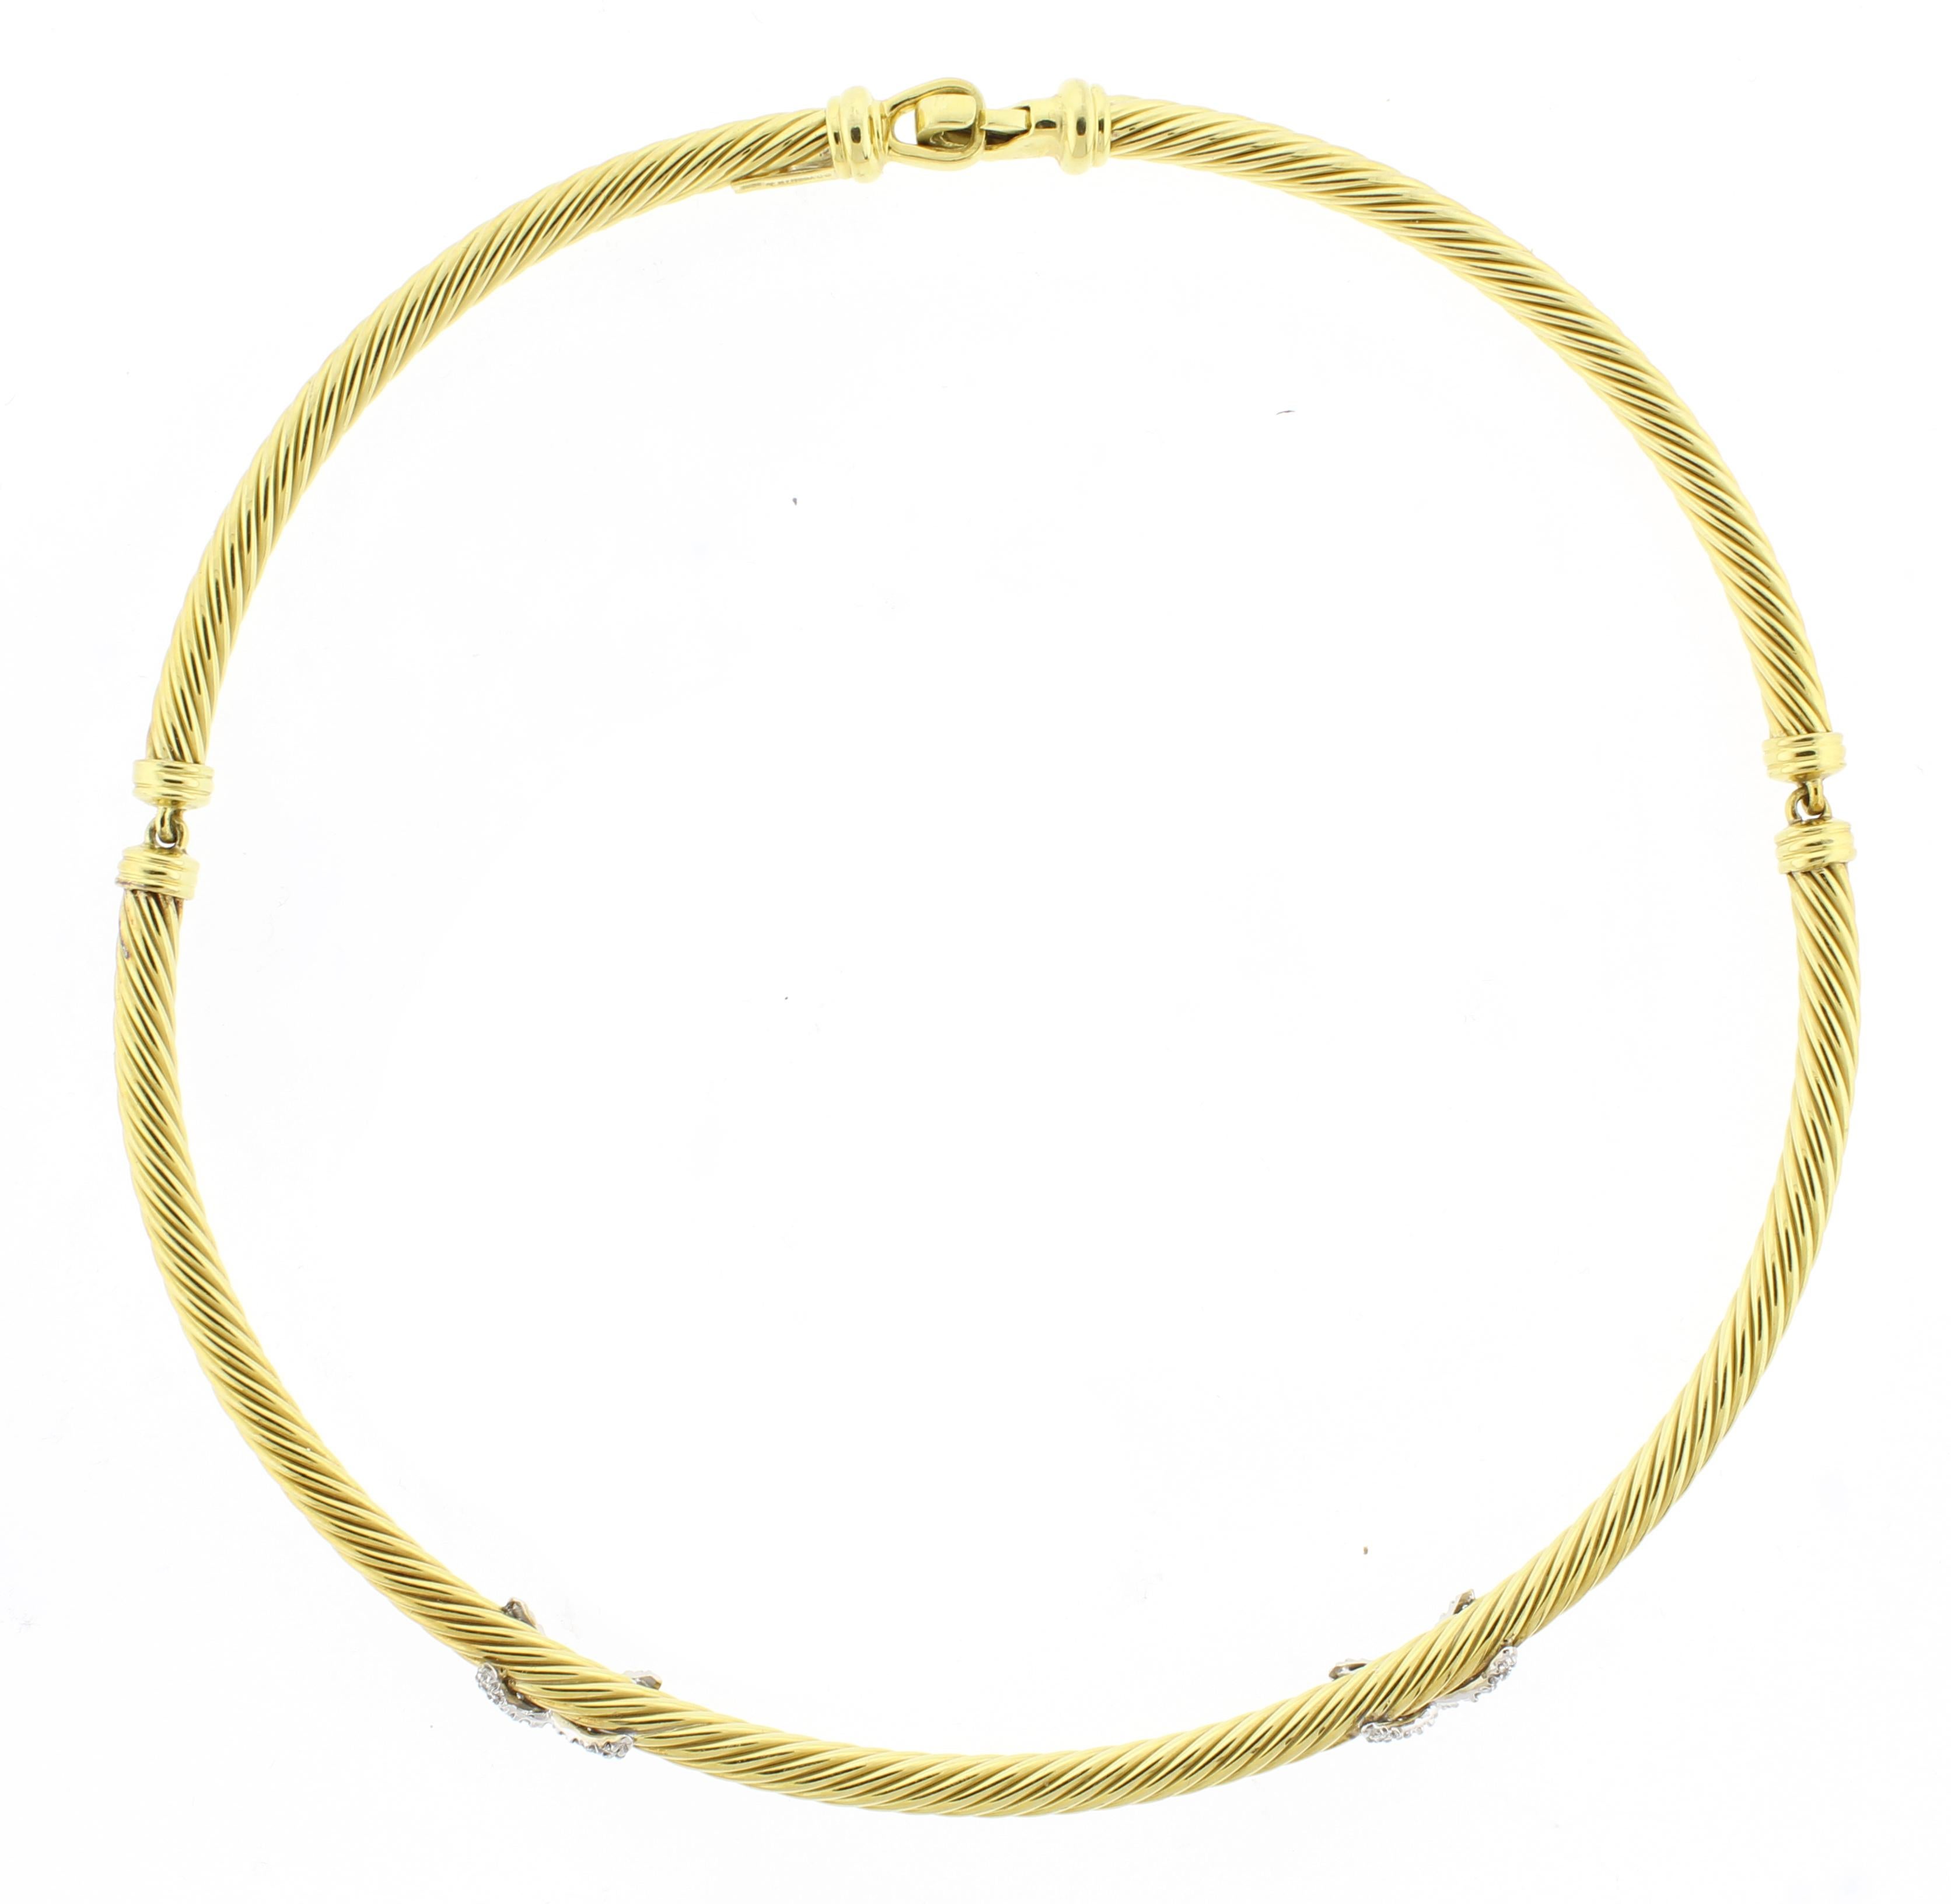 Brilliant Cut David Yurman 18kt Gold Diamond X Cable Necklace For Sale